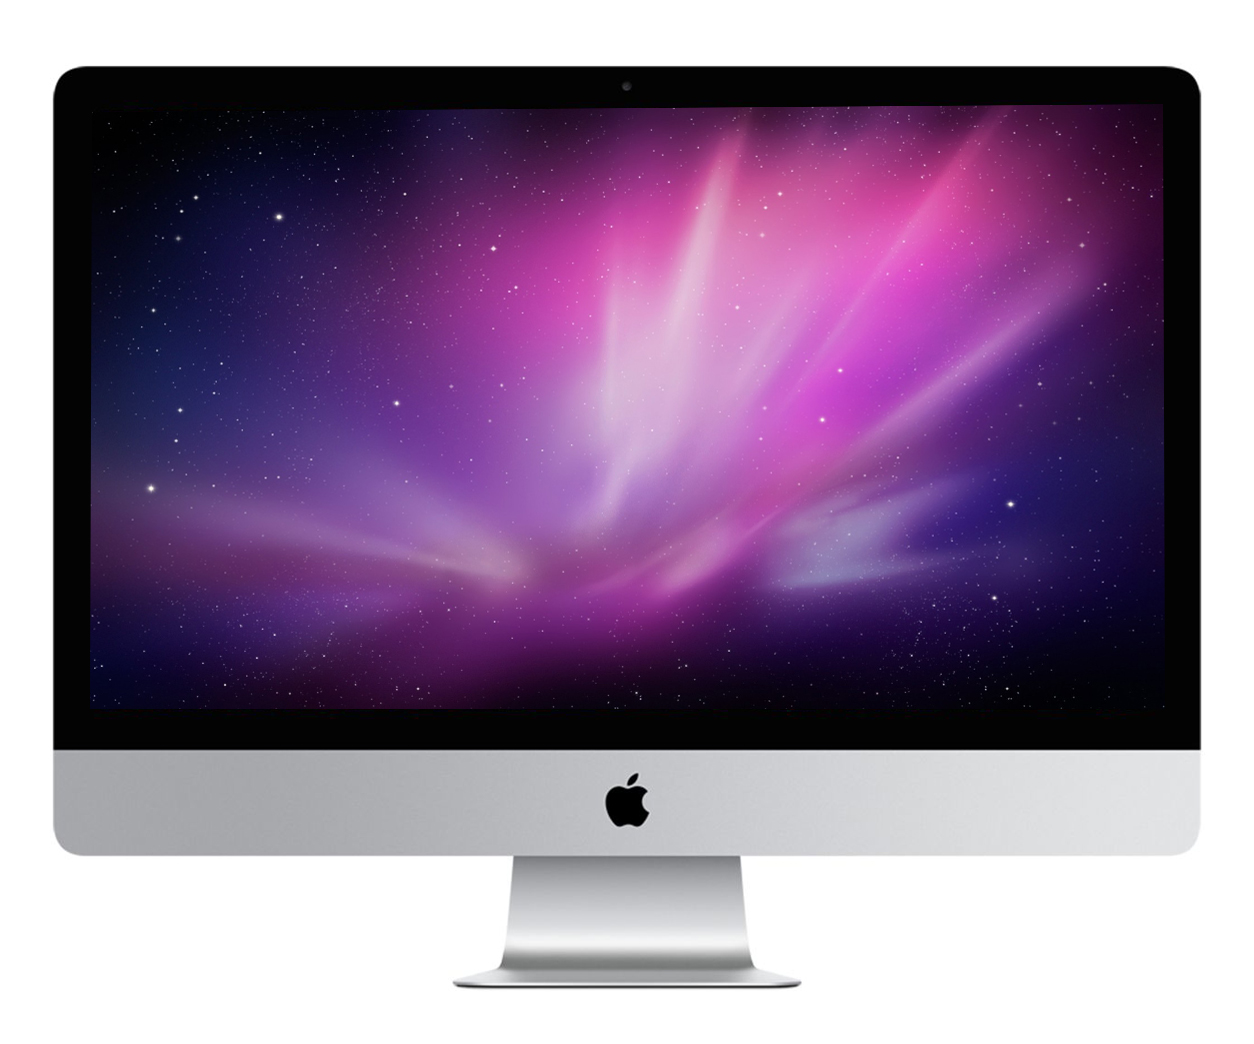 Apple iMac 21.5 inch A1418 late 2015 Model